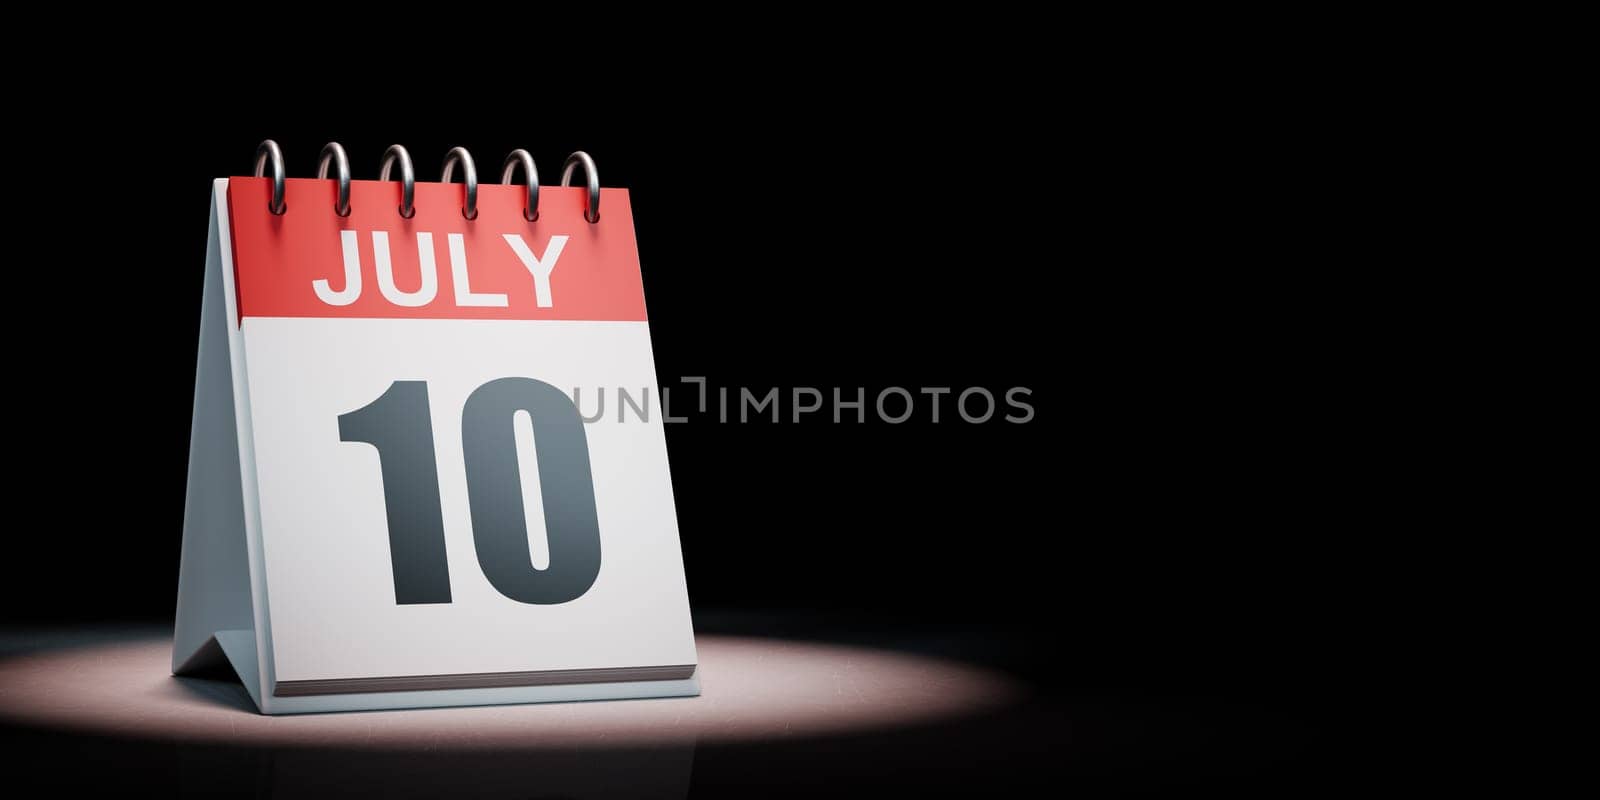 July 10 Calendar Spotlighted on Black Background by make